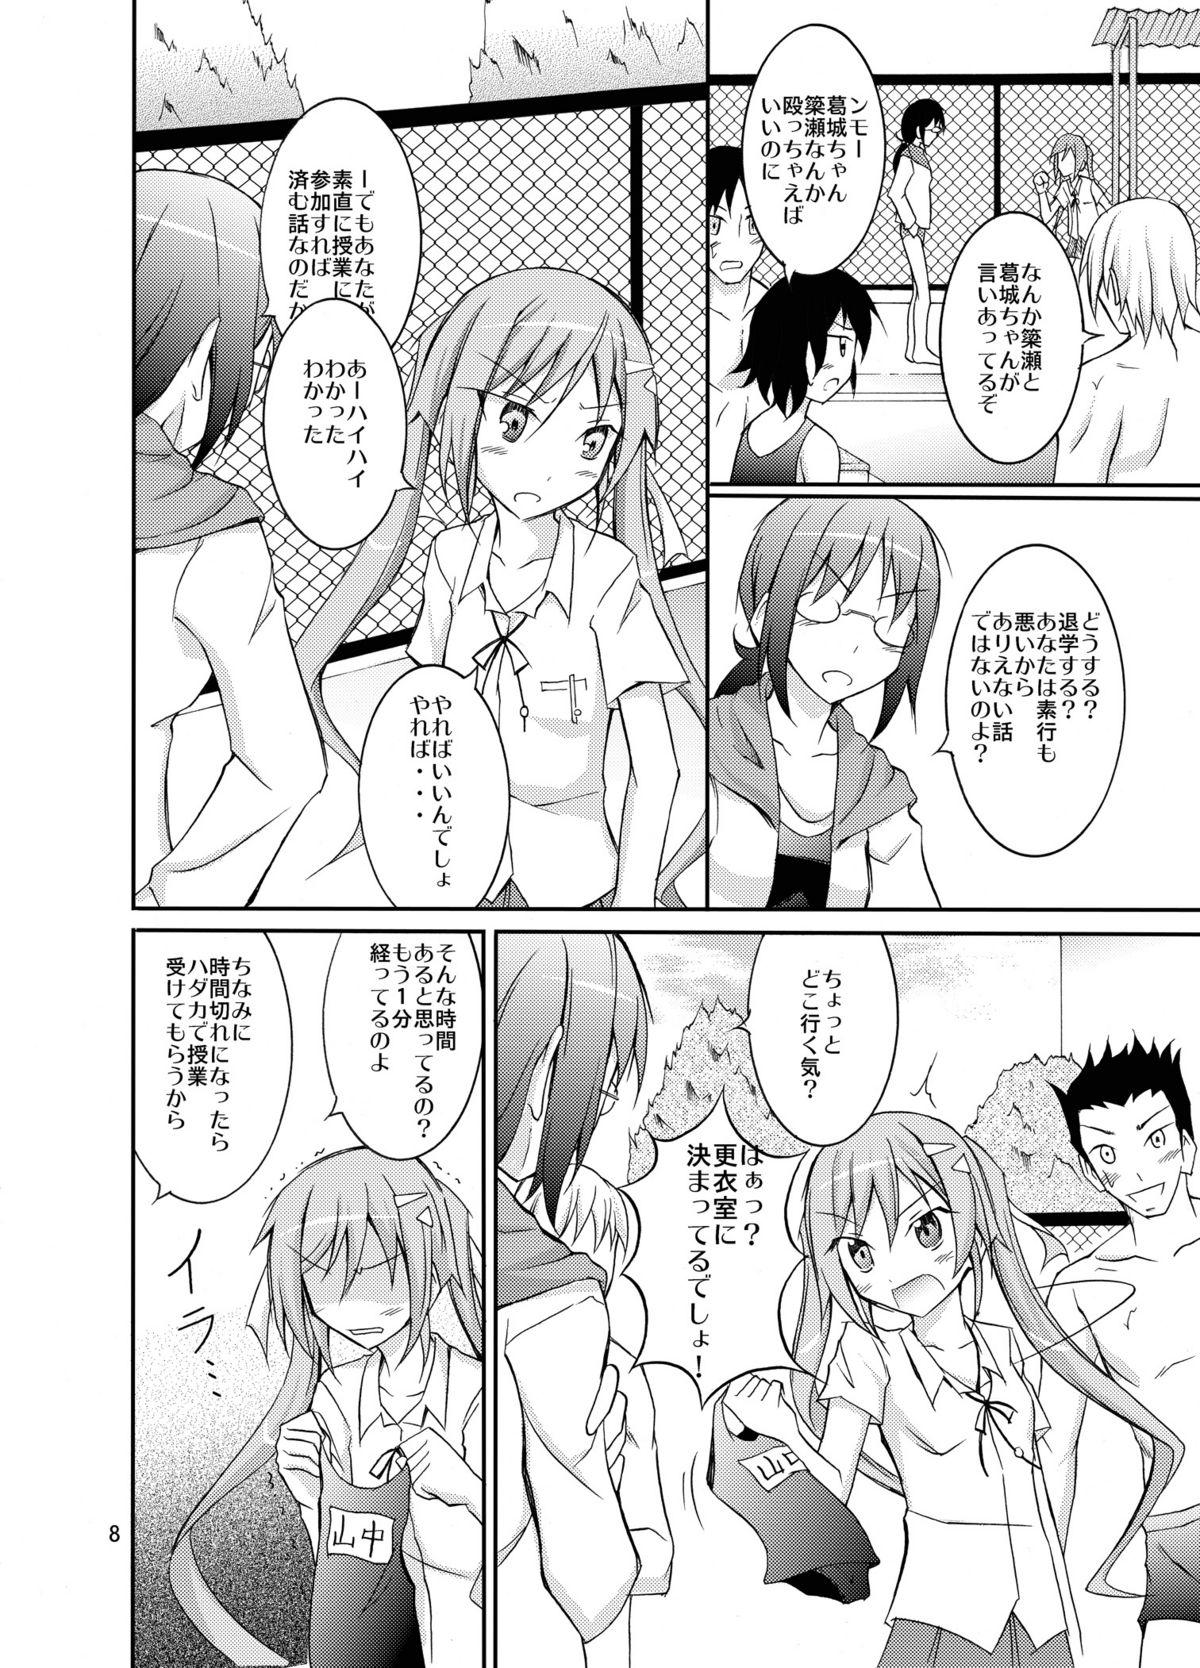 Blowing Kyou no Taiiku wa Zenra Suiei 3 Bedroom - Page 7